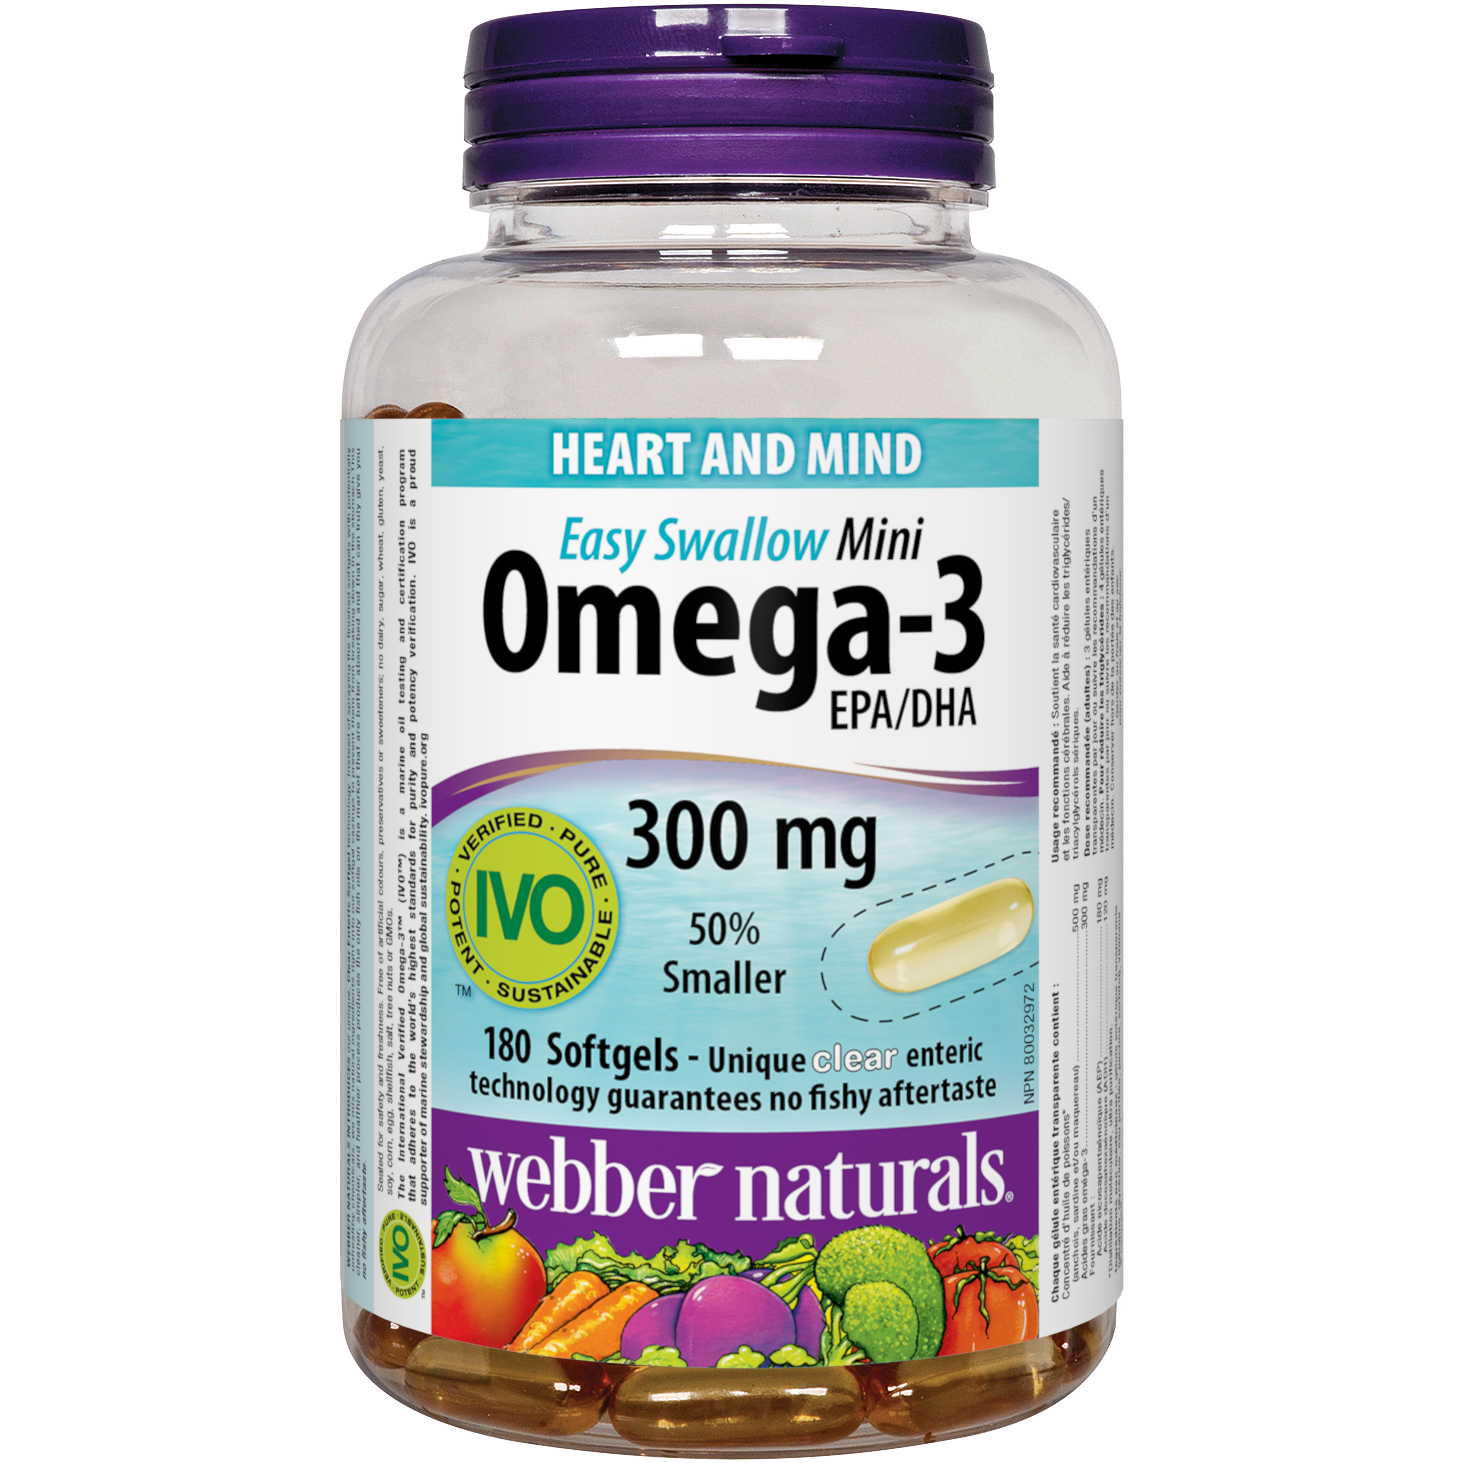 Omega-3 Mini Easy Swallow 300 mg EPA/DHA for Webber Naturals|v|hi-res|WN3391